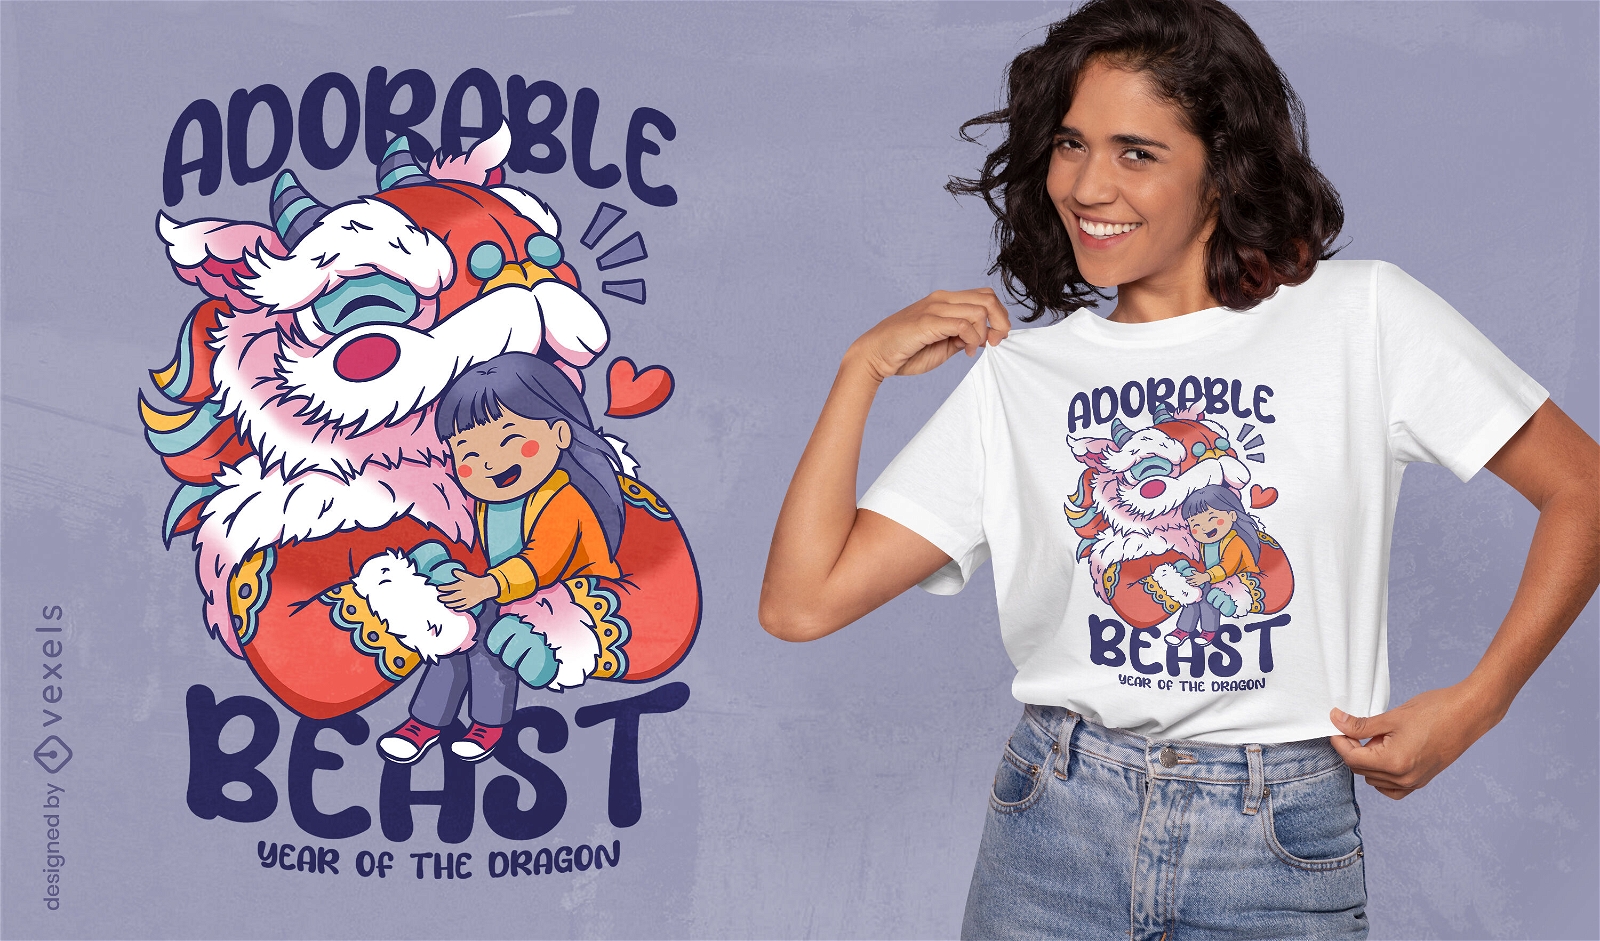 Adorable beast dragon t-shirt design